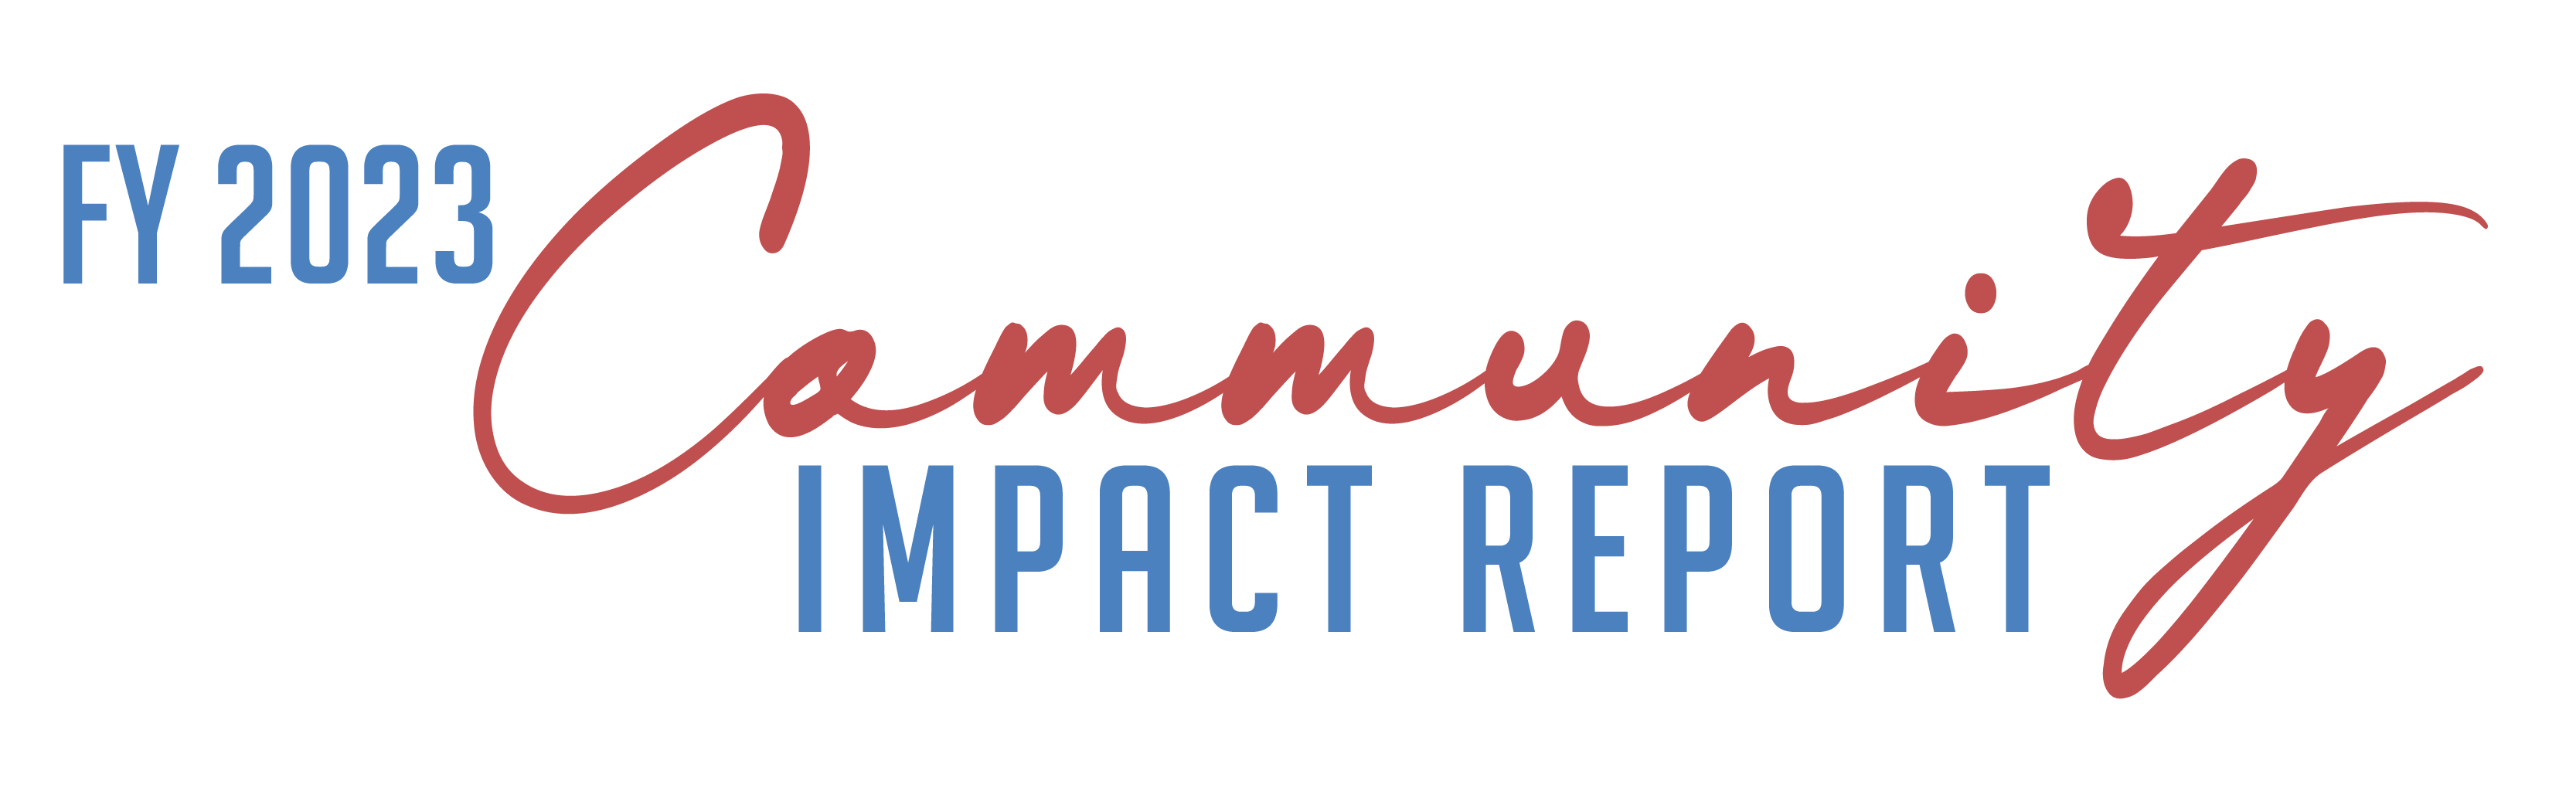 FY 2023_Community Impact Report Masthead